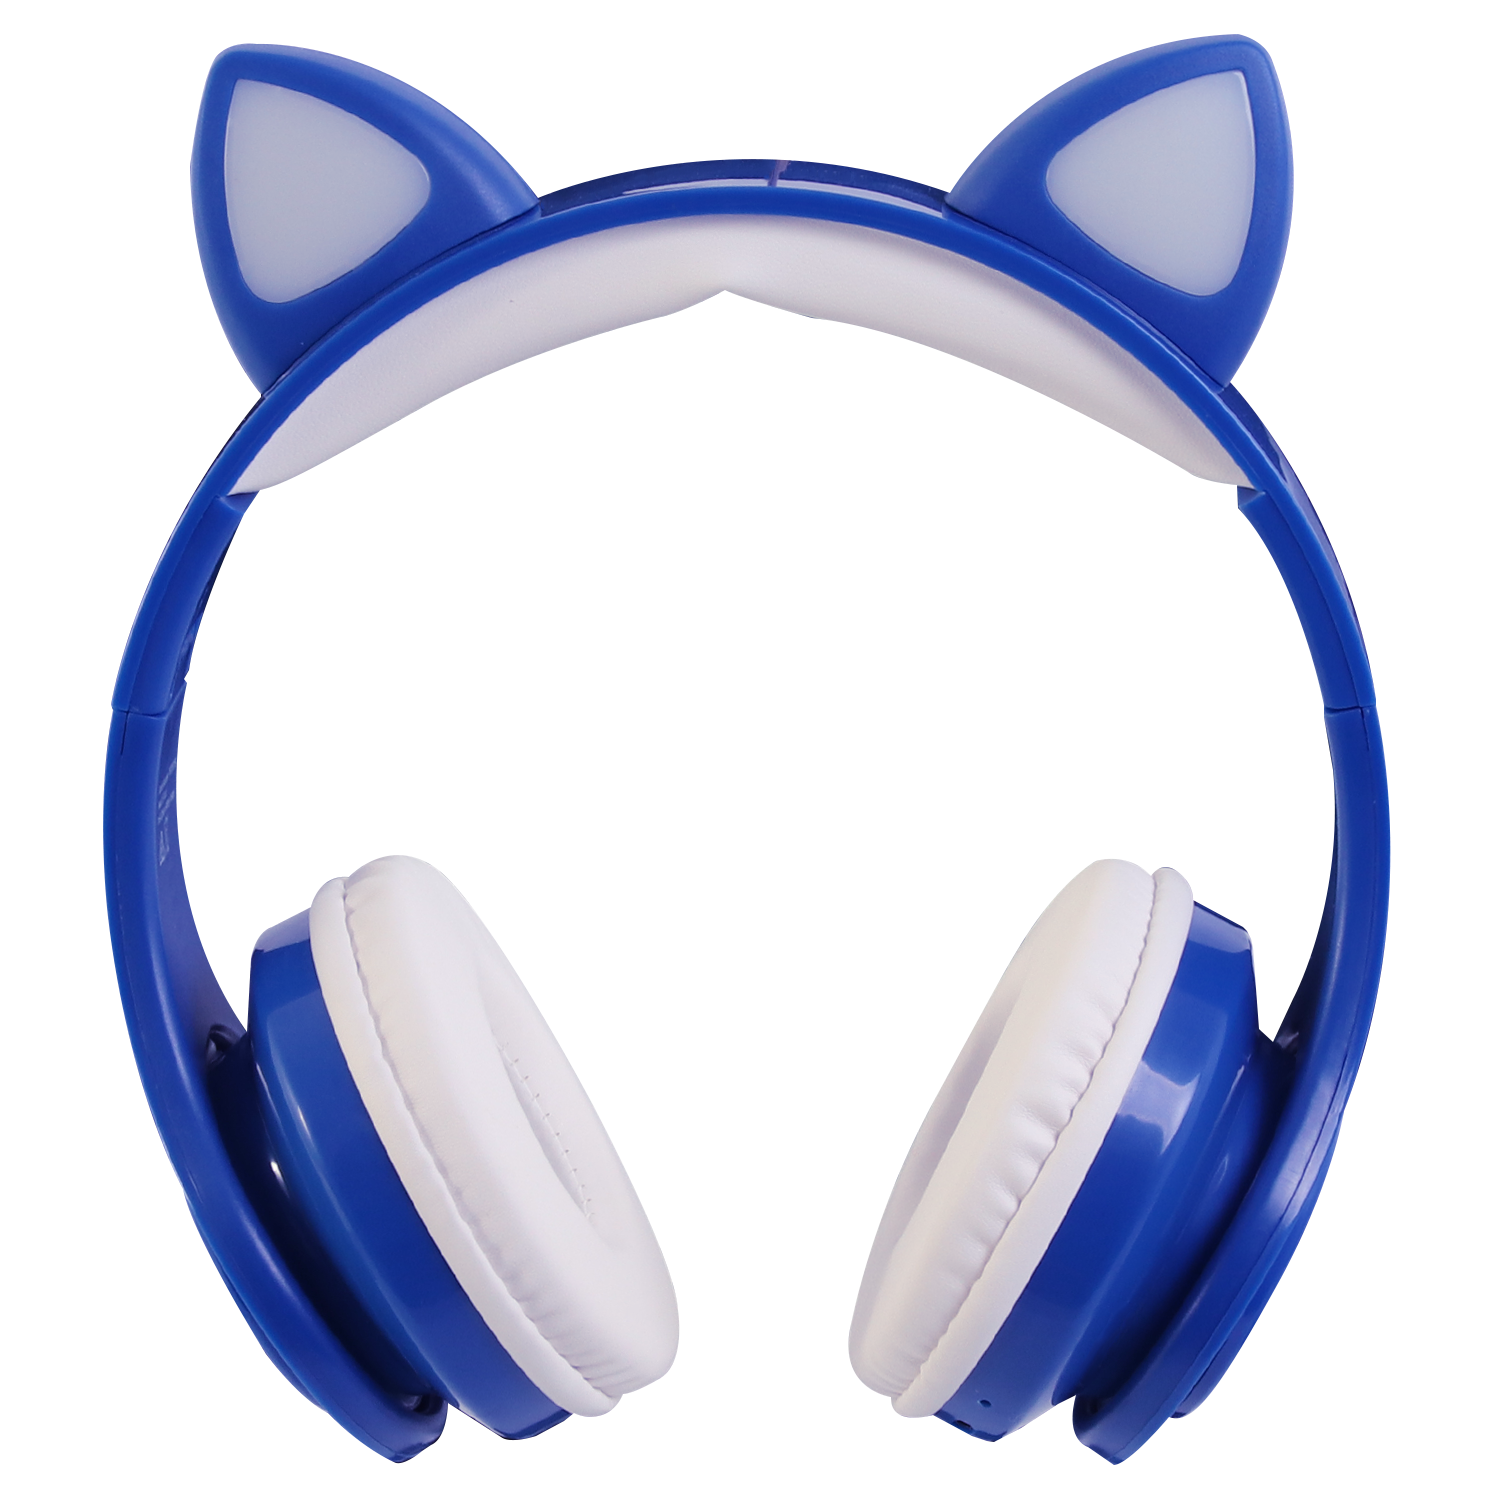 TechXtras Bluetooth Cat Ears Headphones - Blue